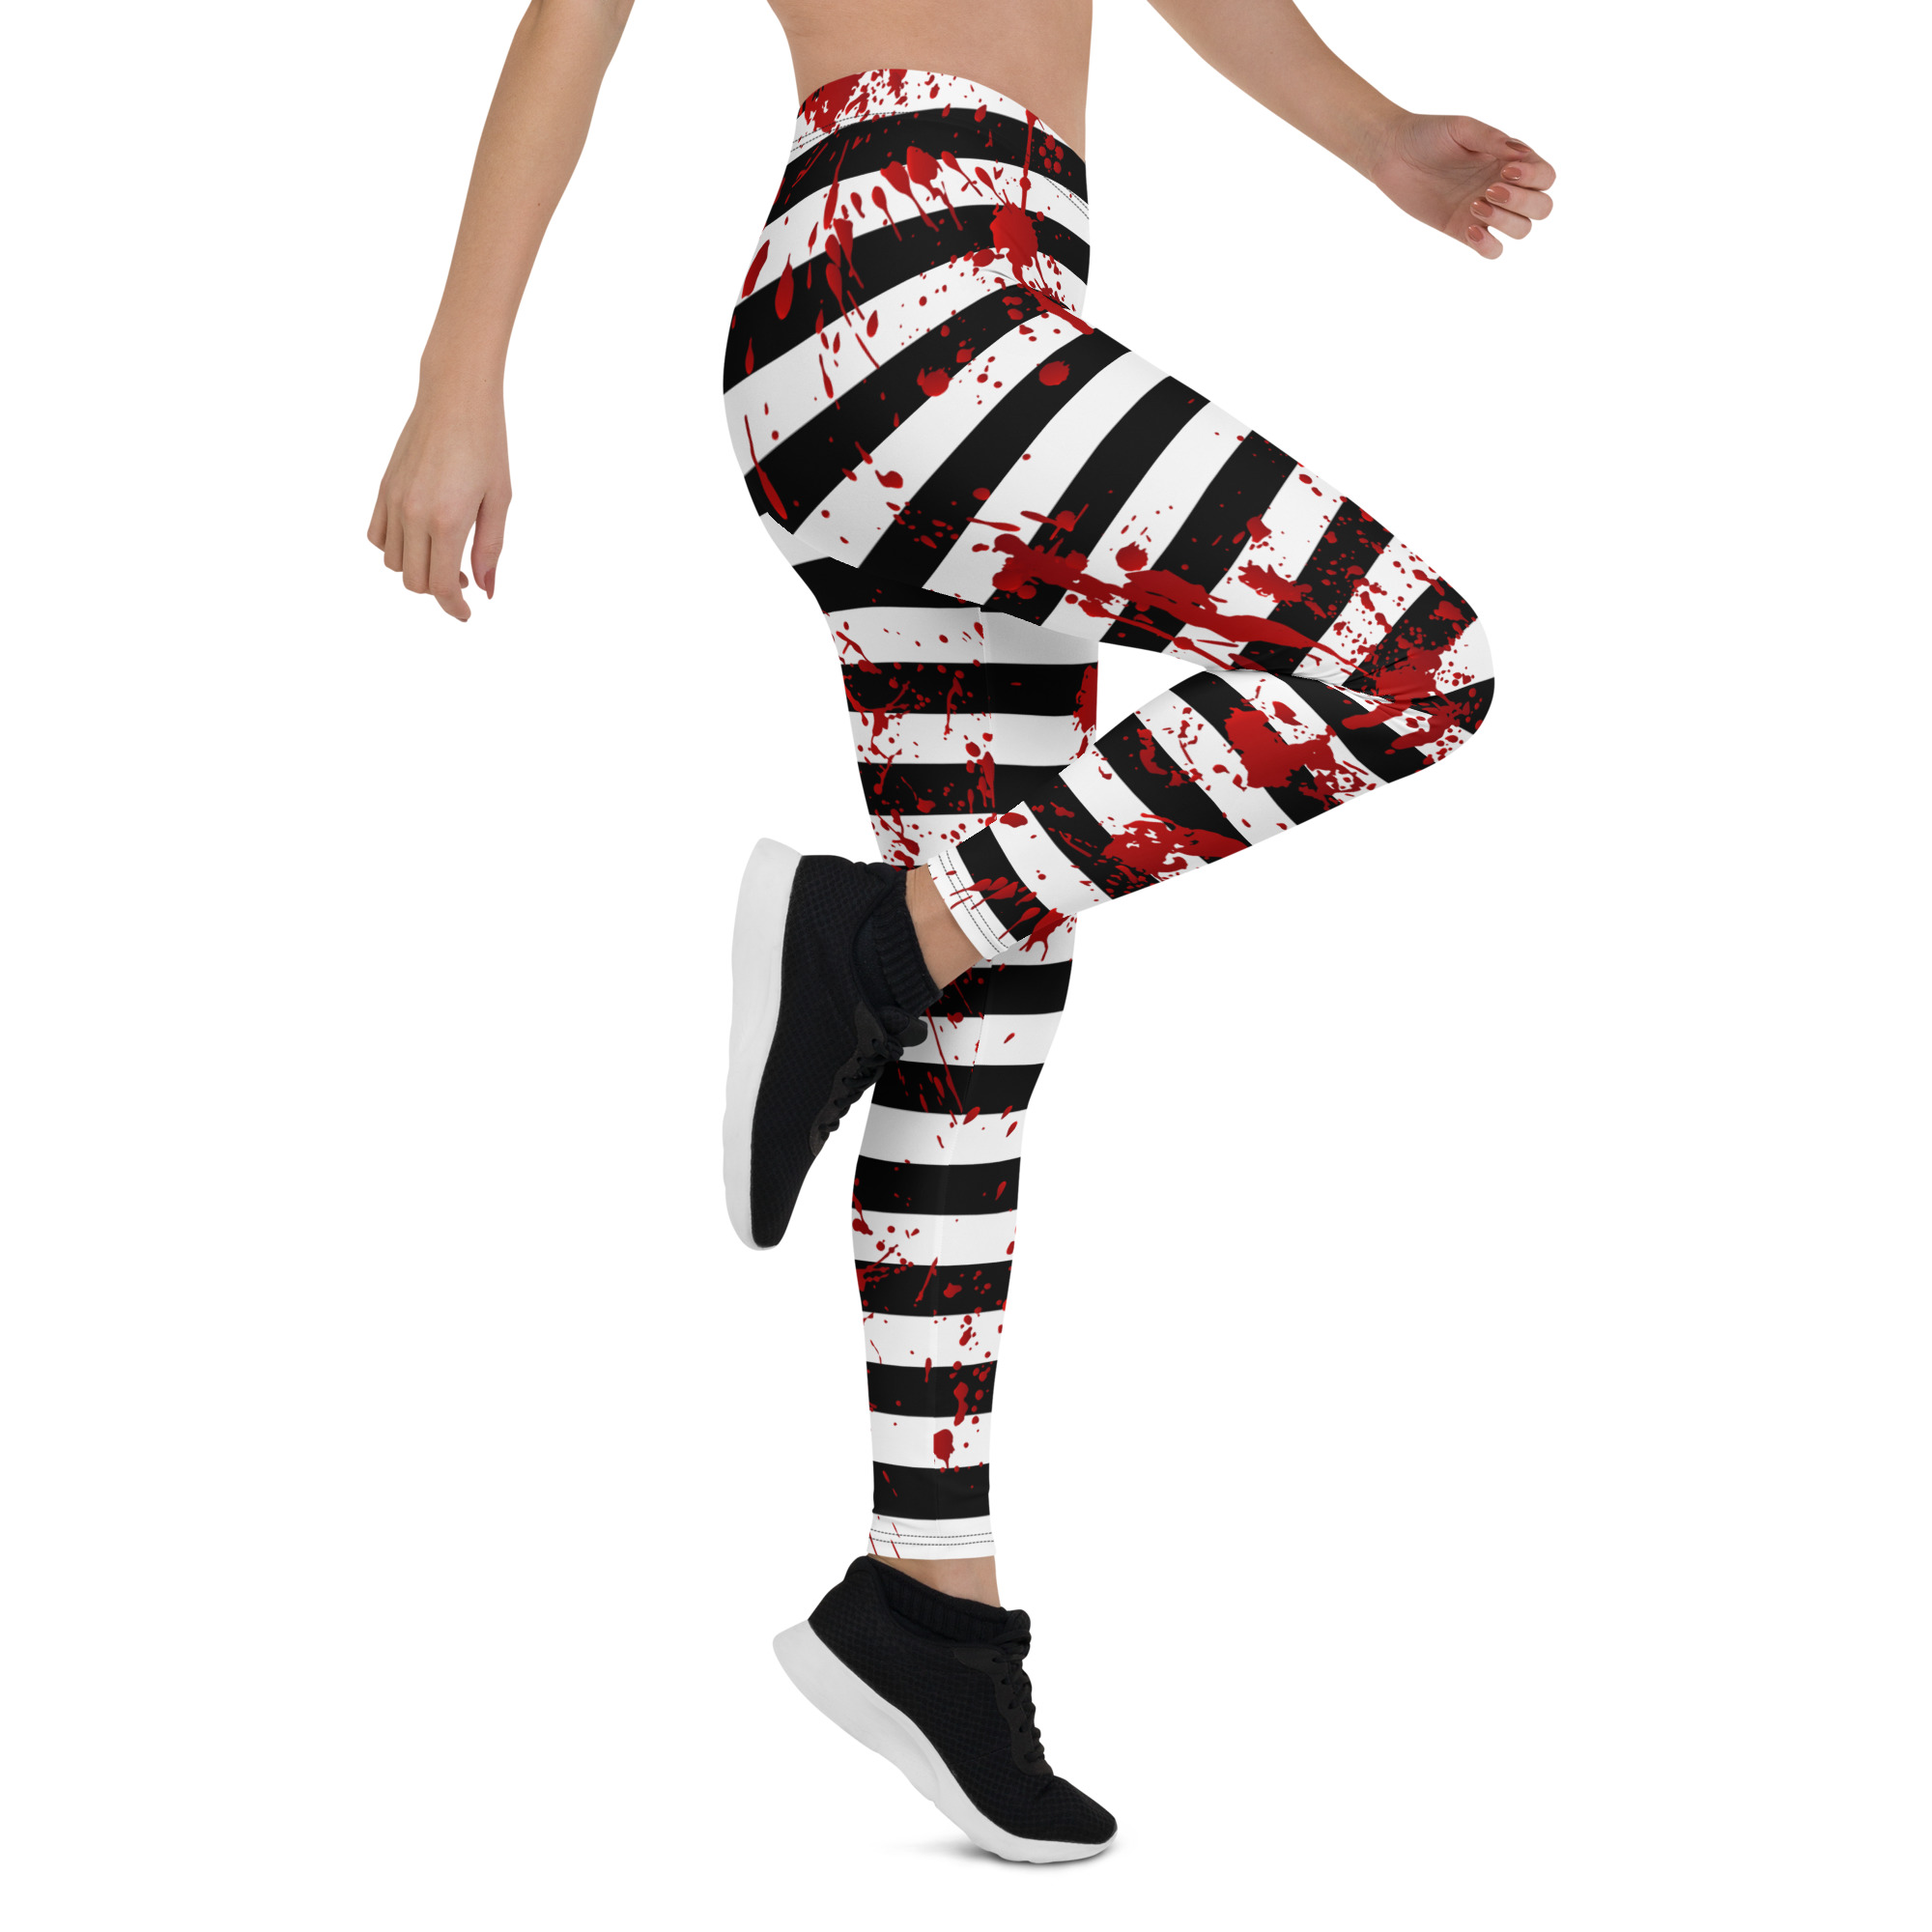 Bloody Halloween striped leggings – Halloween-themed striped